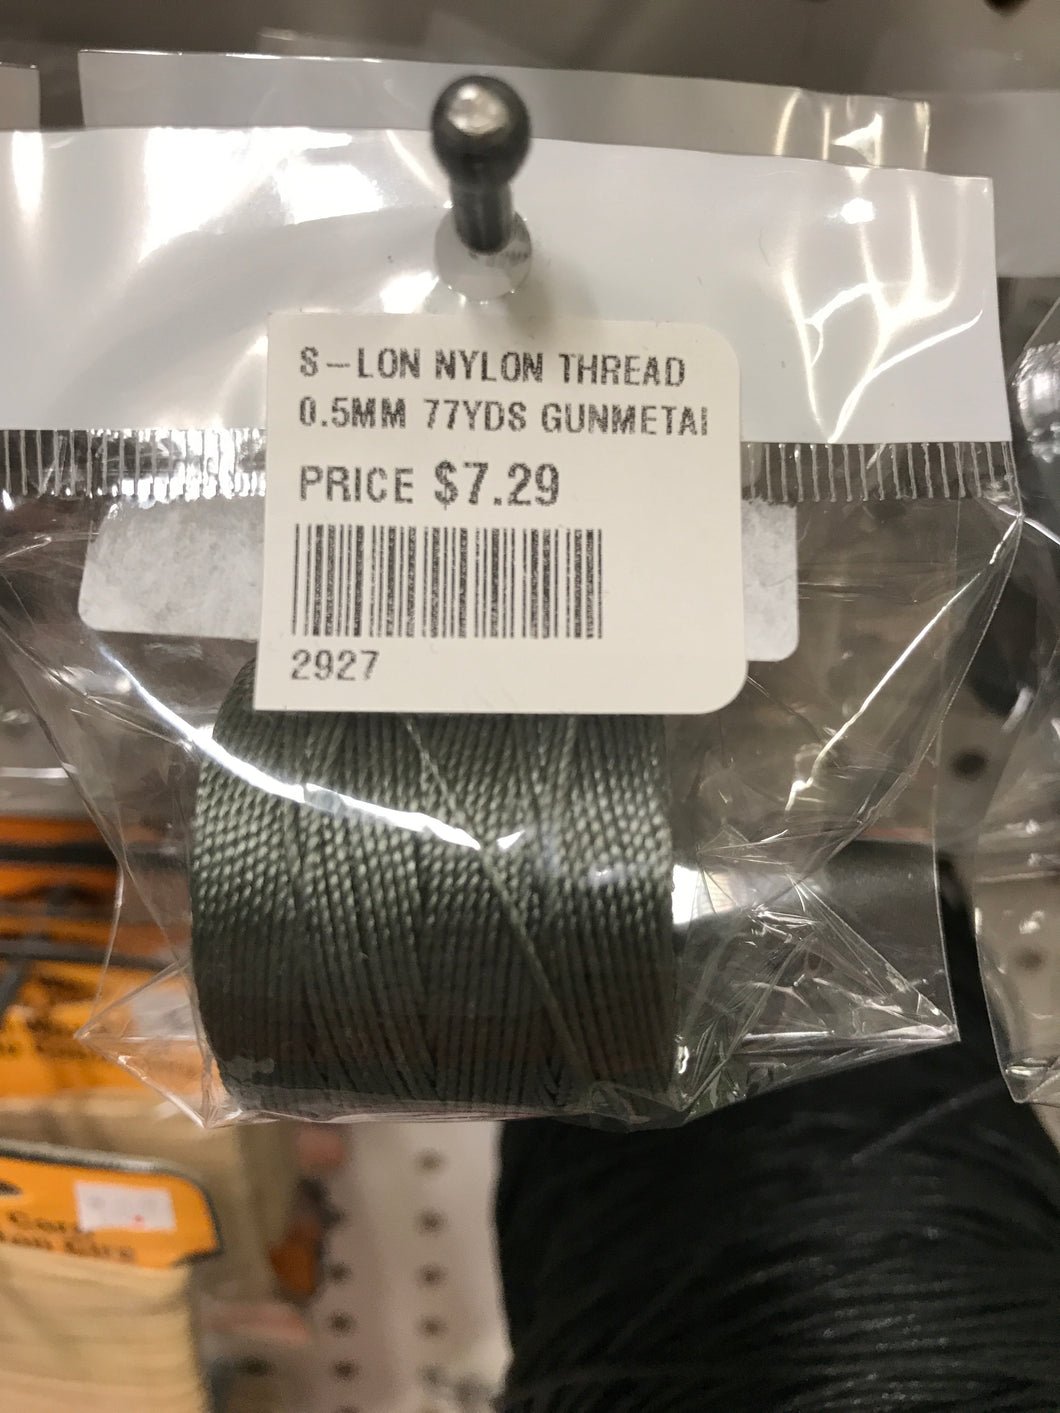 S-LON NYLON THREAD 0.5MM 77YDS GUNMETAL